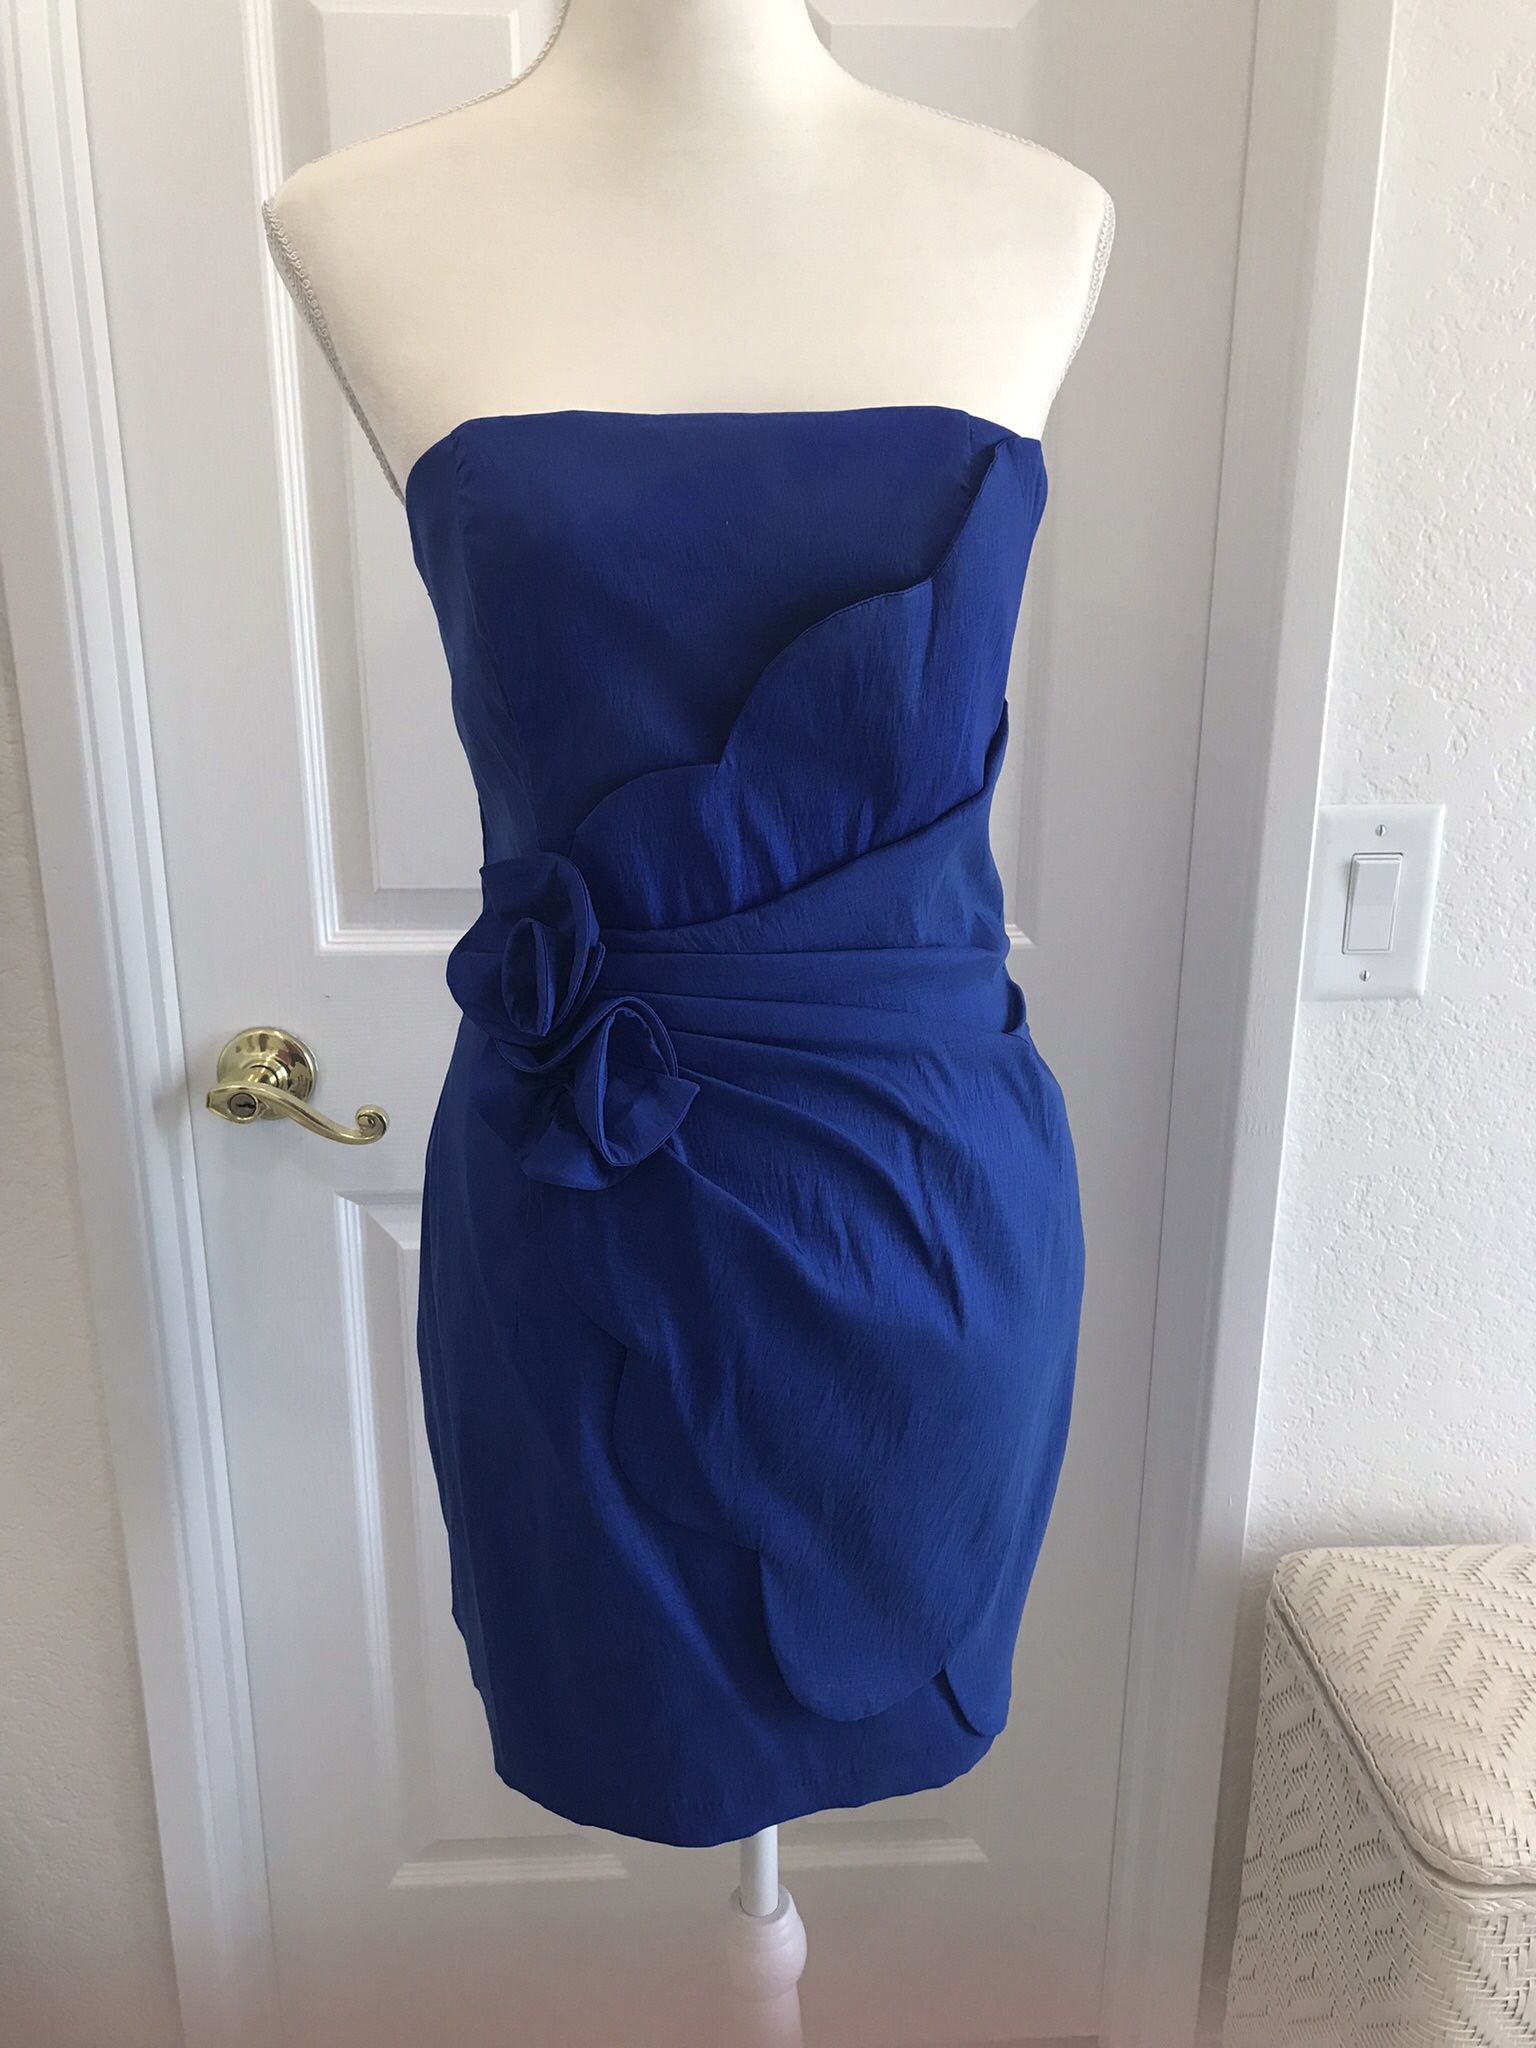 New w/tag Royal Blue Dress Strapless Size 8 $90